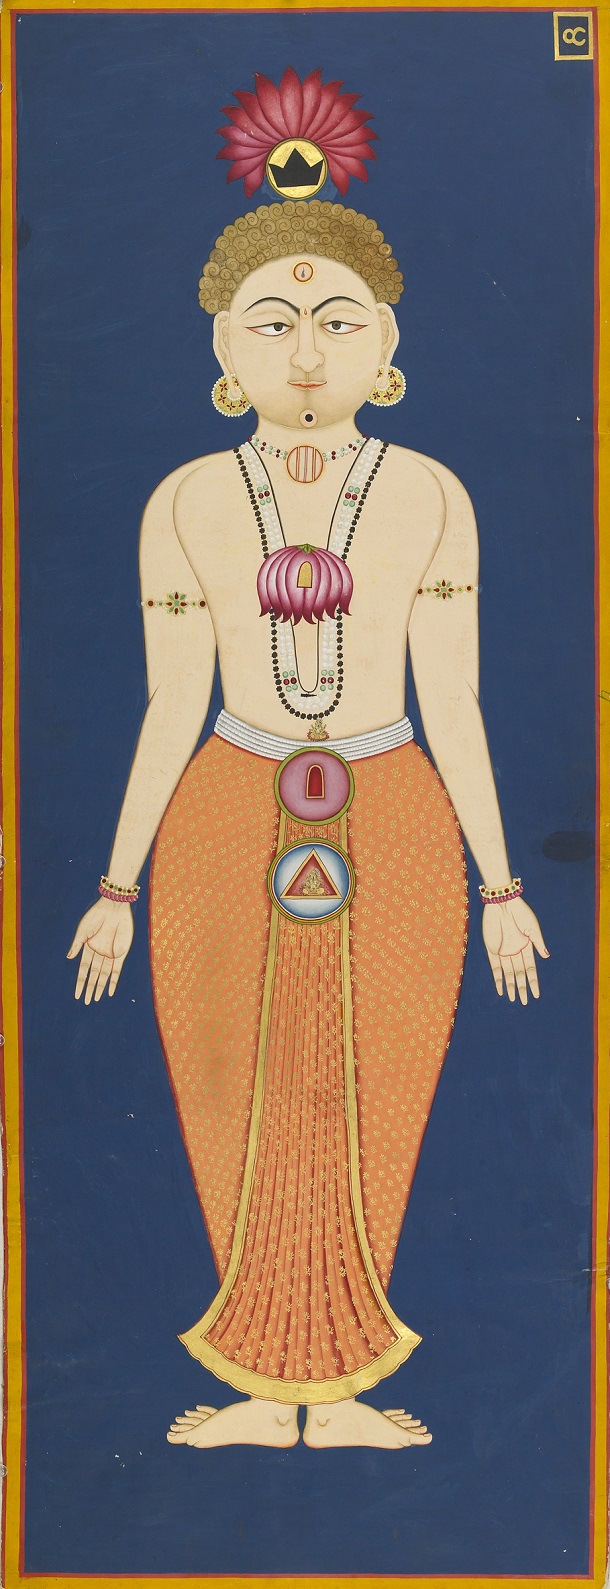 The Chakras of the Subtle Body(folio 4 from the Siddha Siddhanta Paddhati Jodhpur, Rajasthan, 1824)